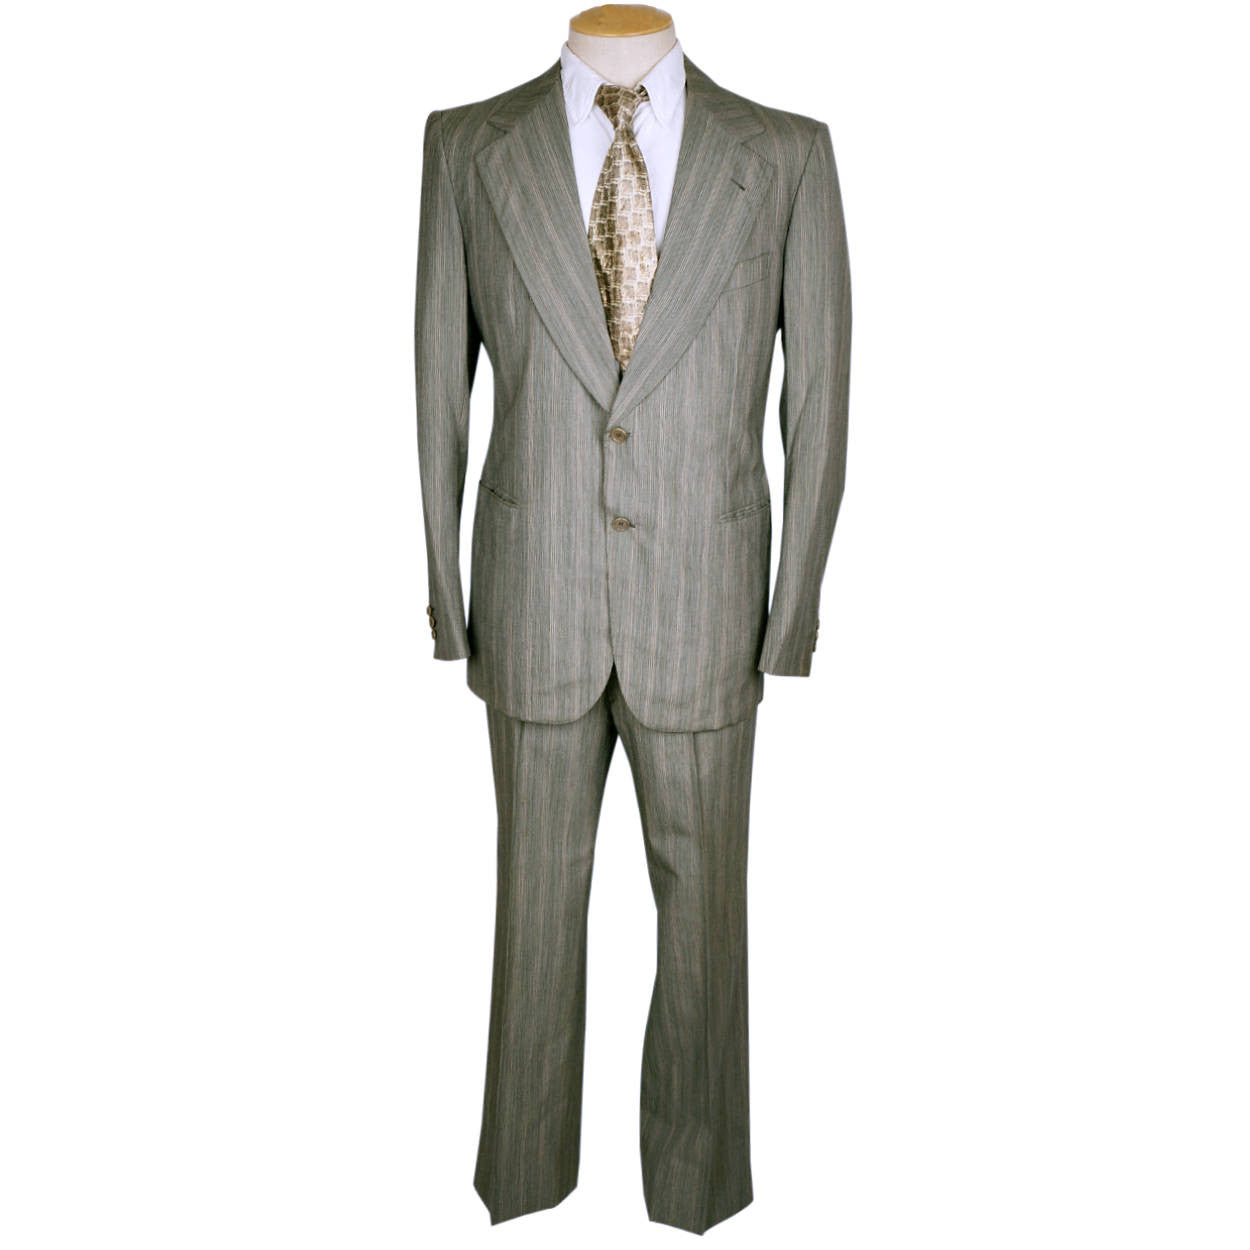 Brioni 70s Pinstripe Suit